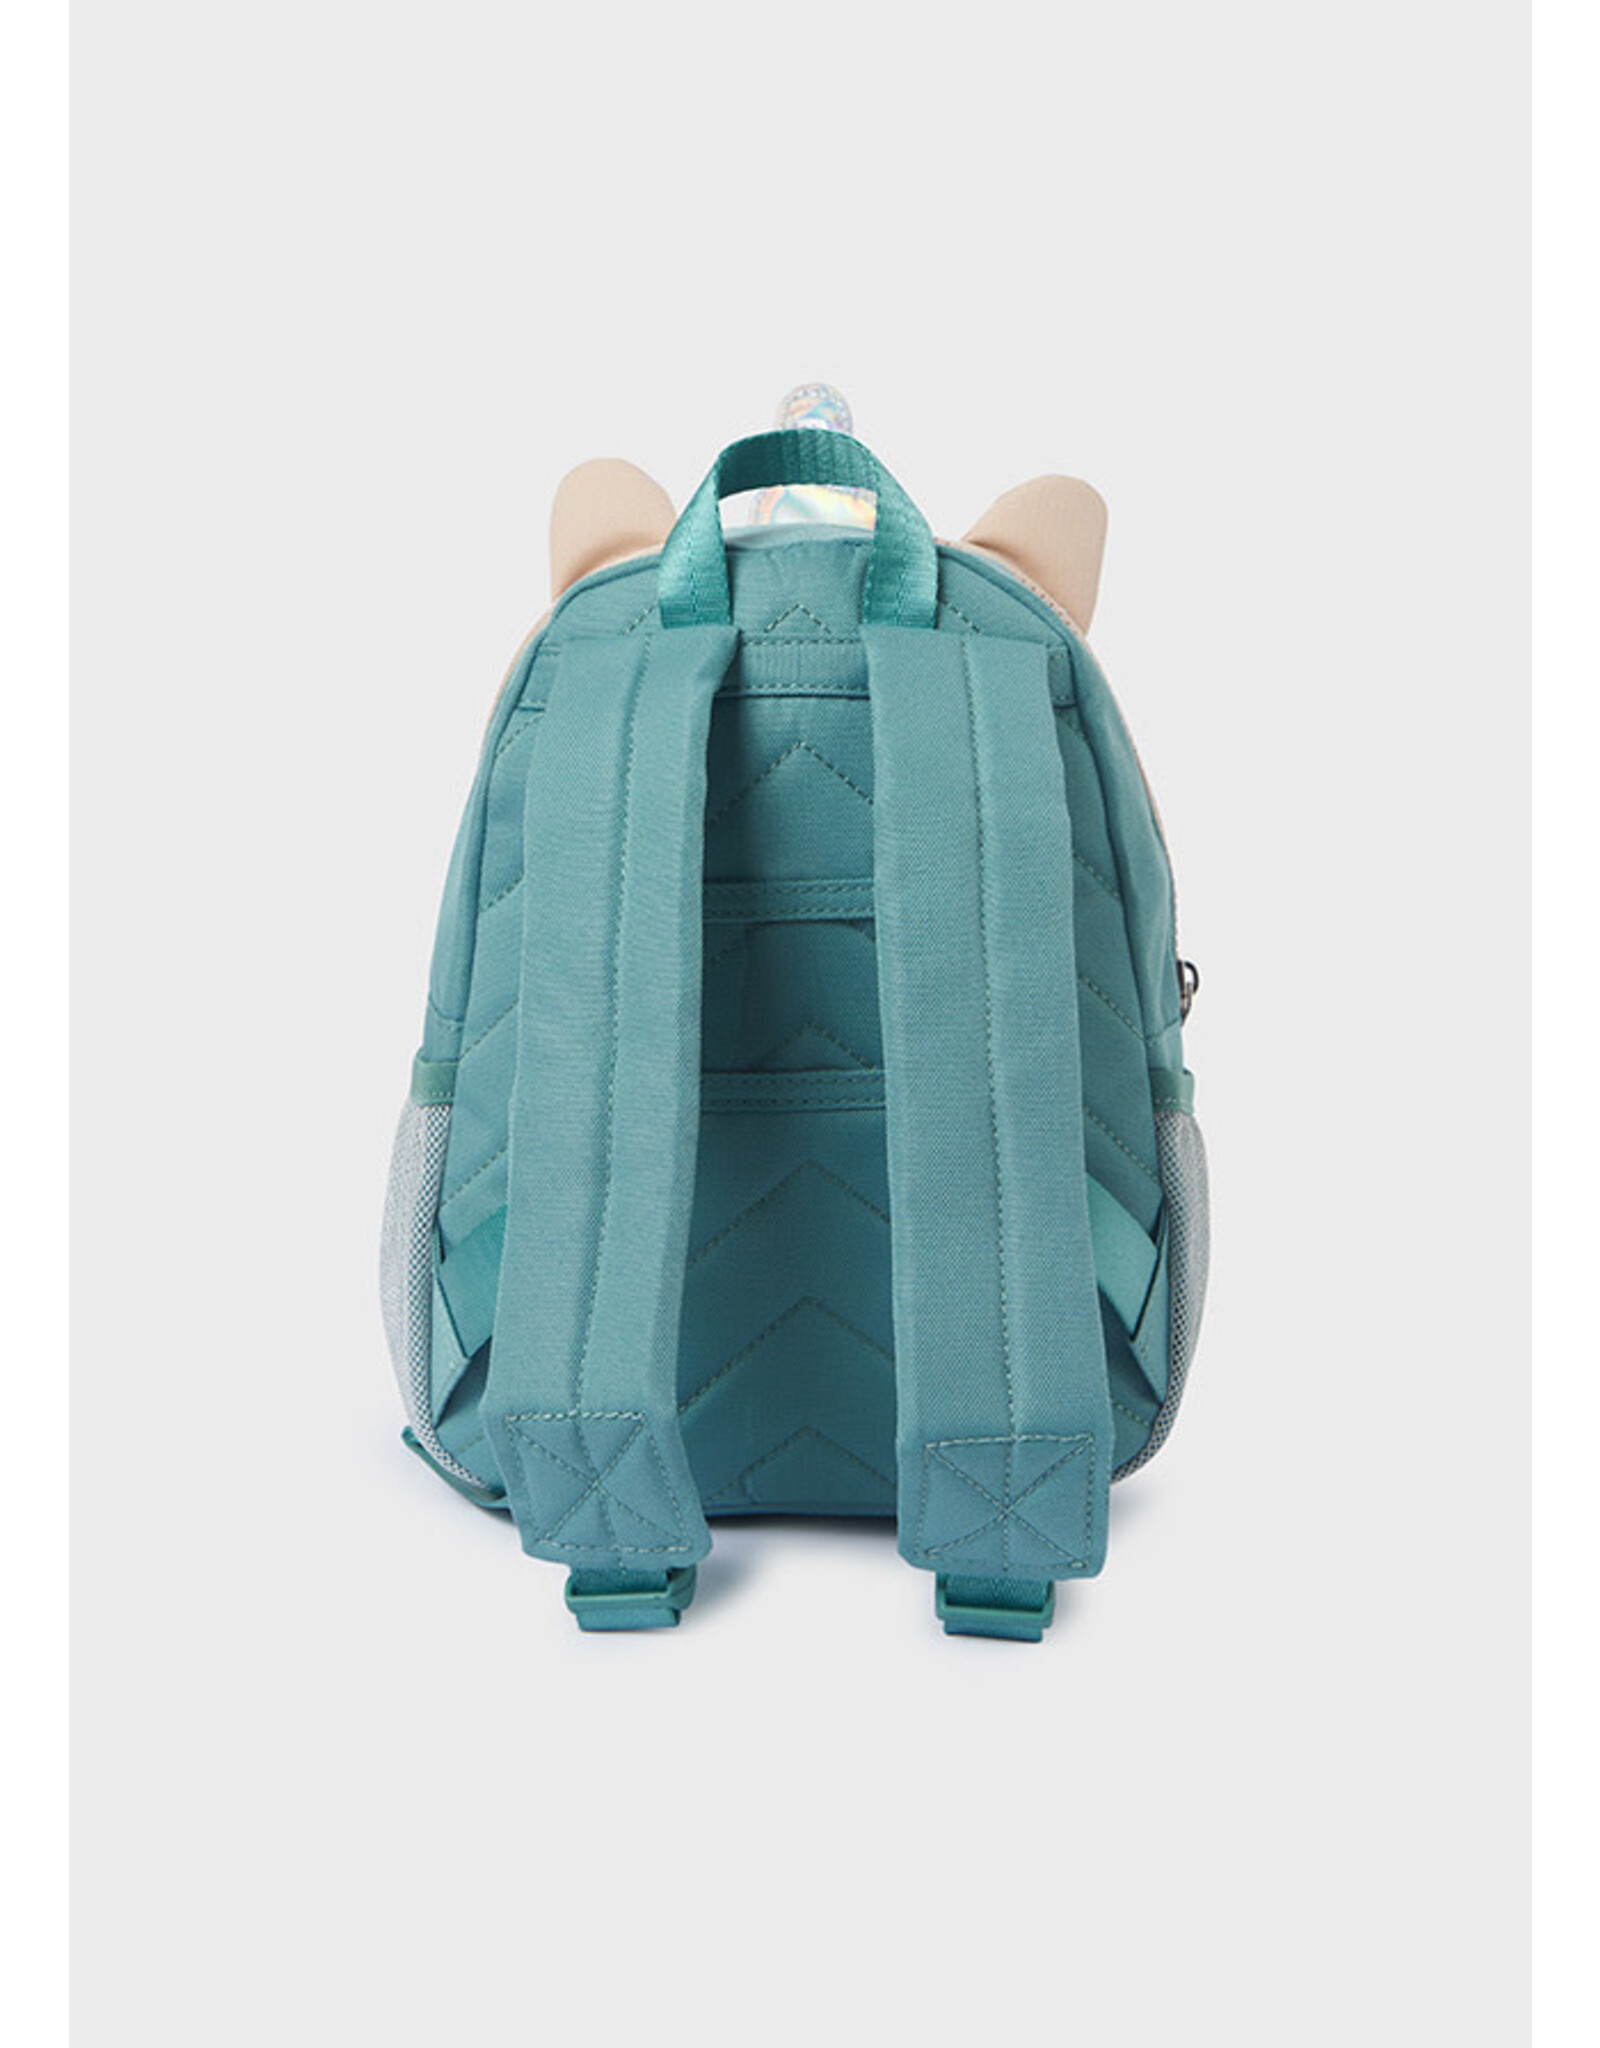 Mayoral Aqua Green Unicorn Backpack